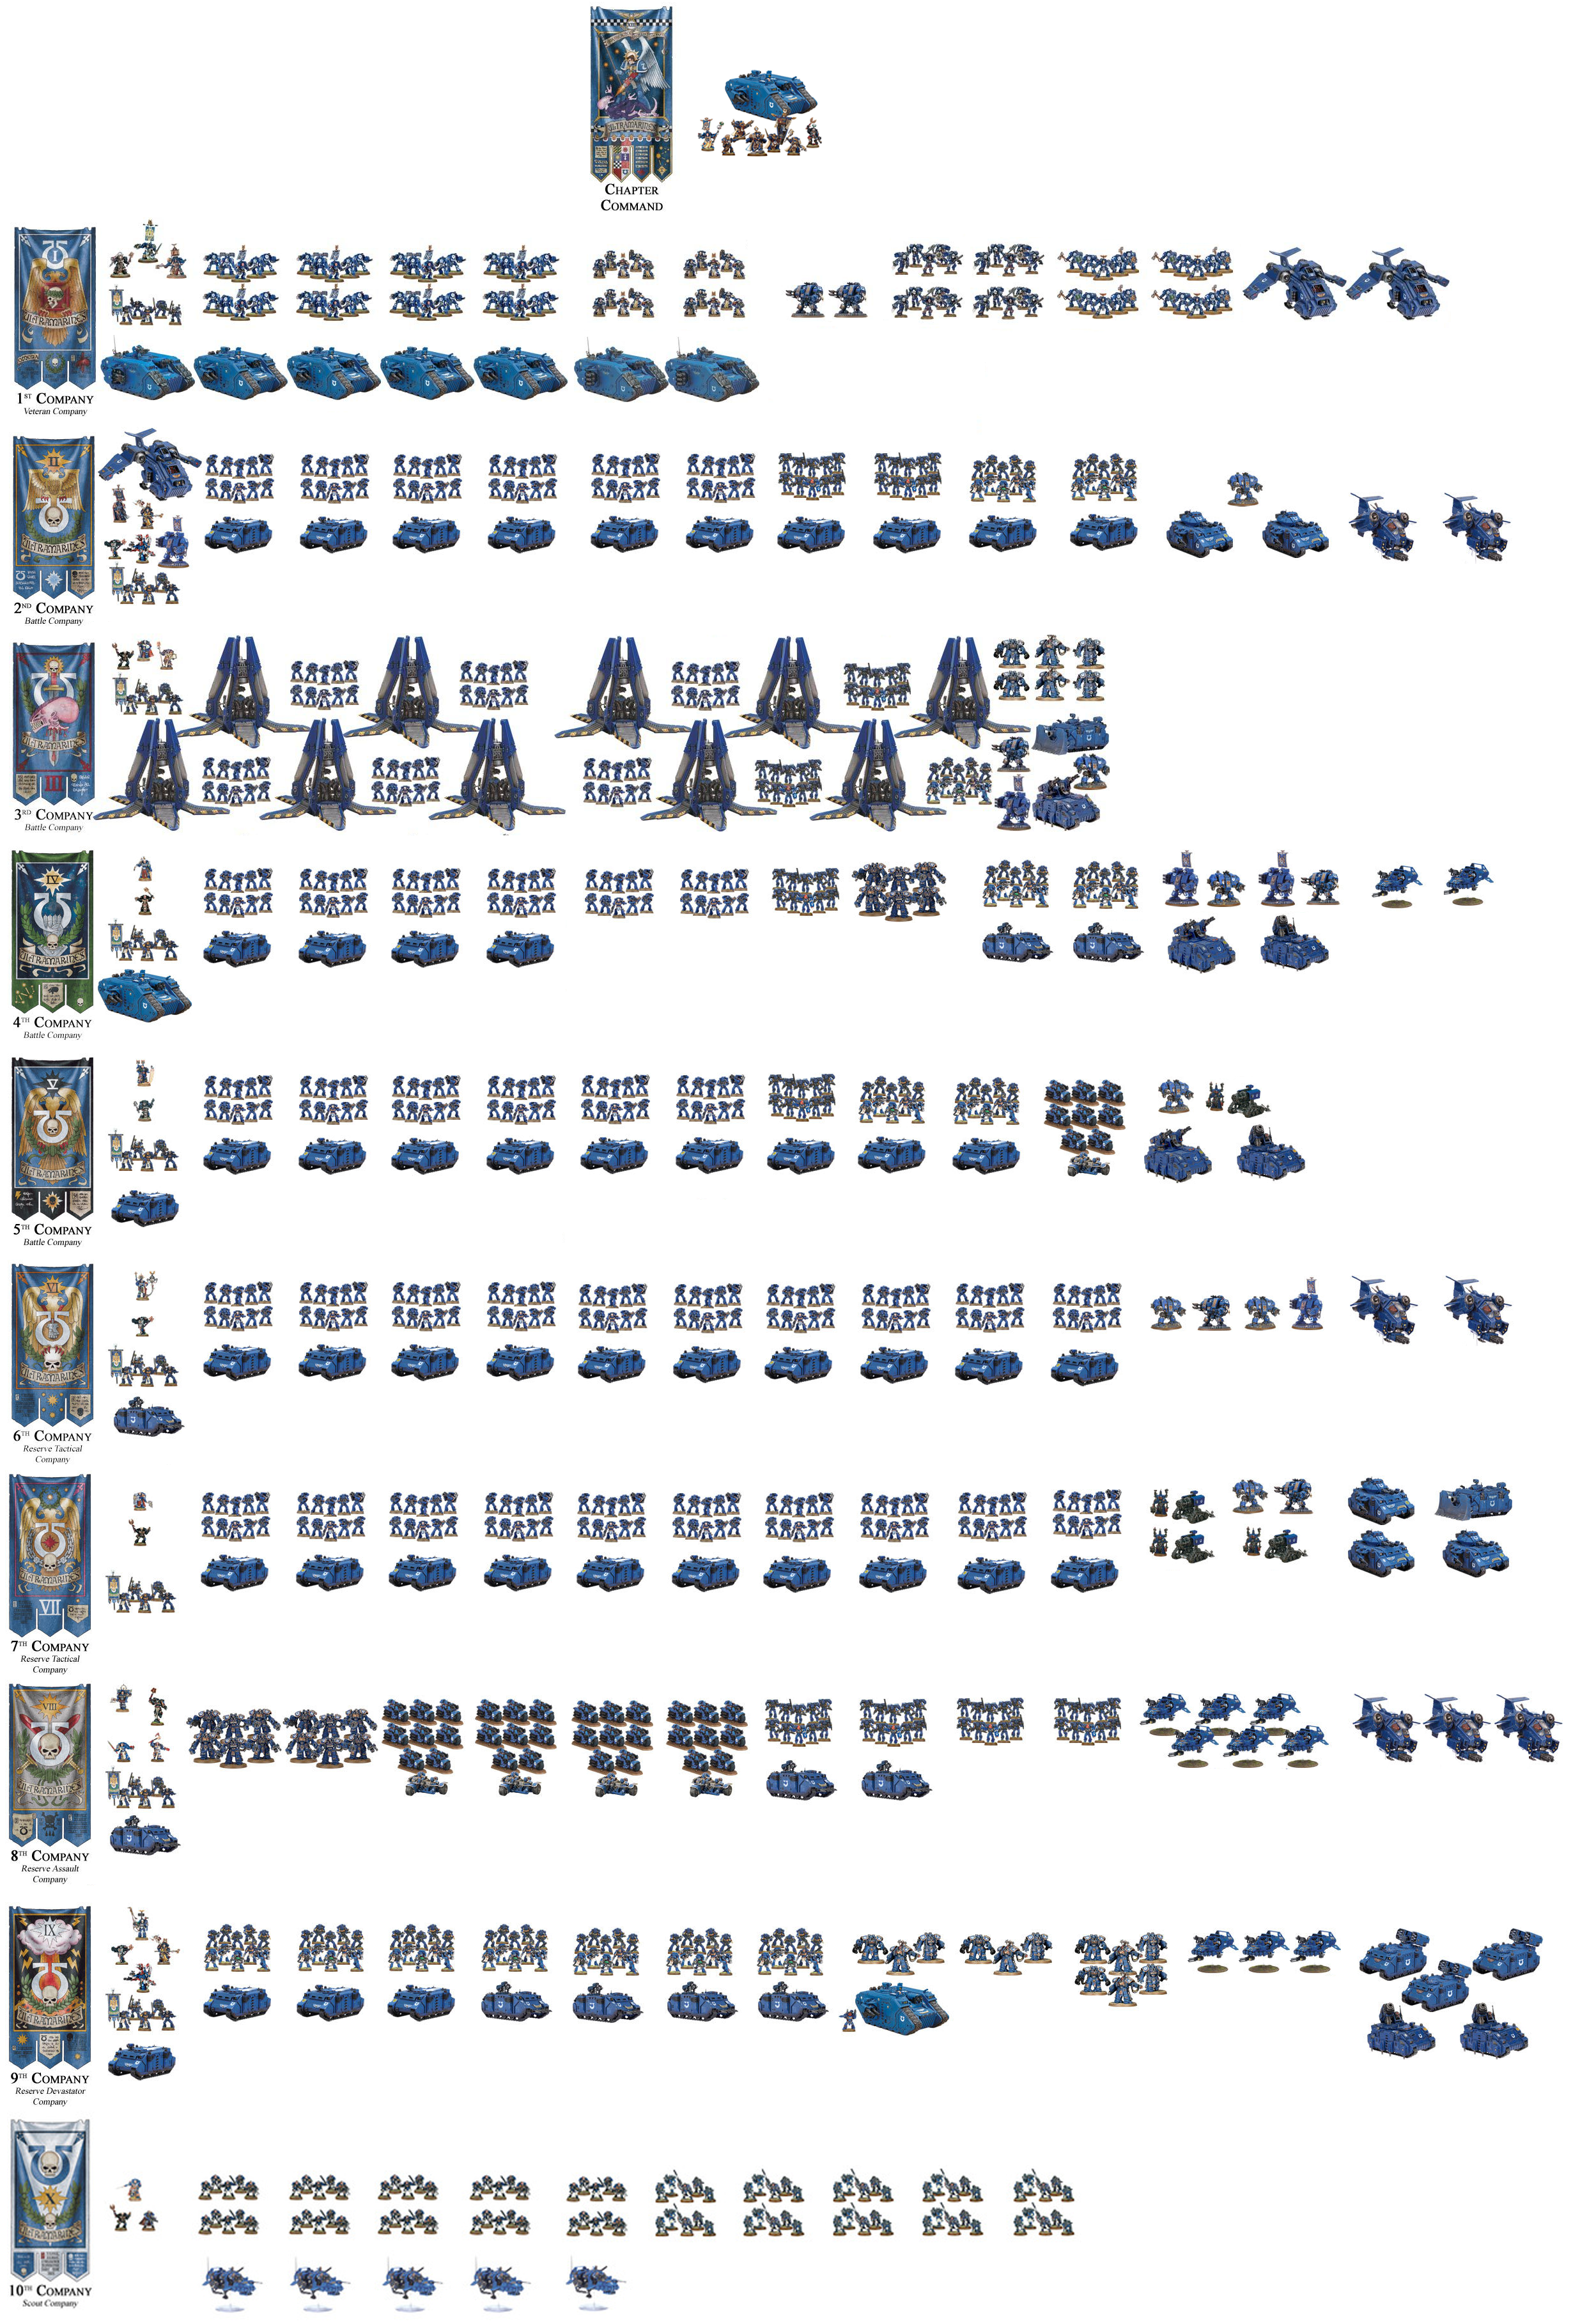 Space Marine Force Organization Chart